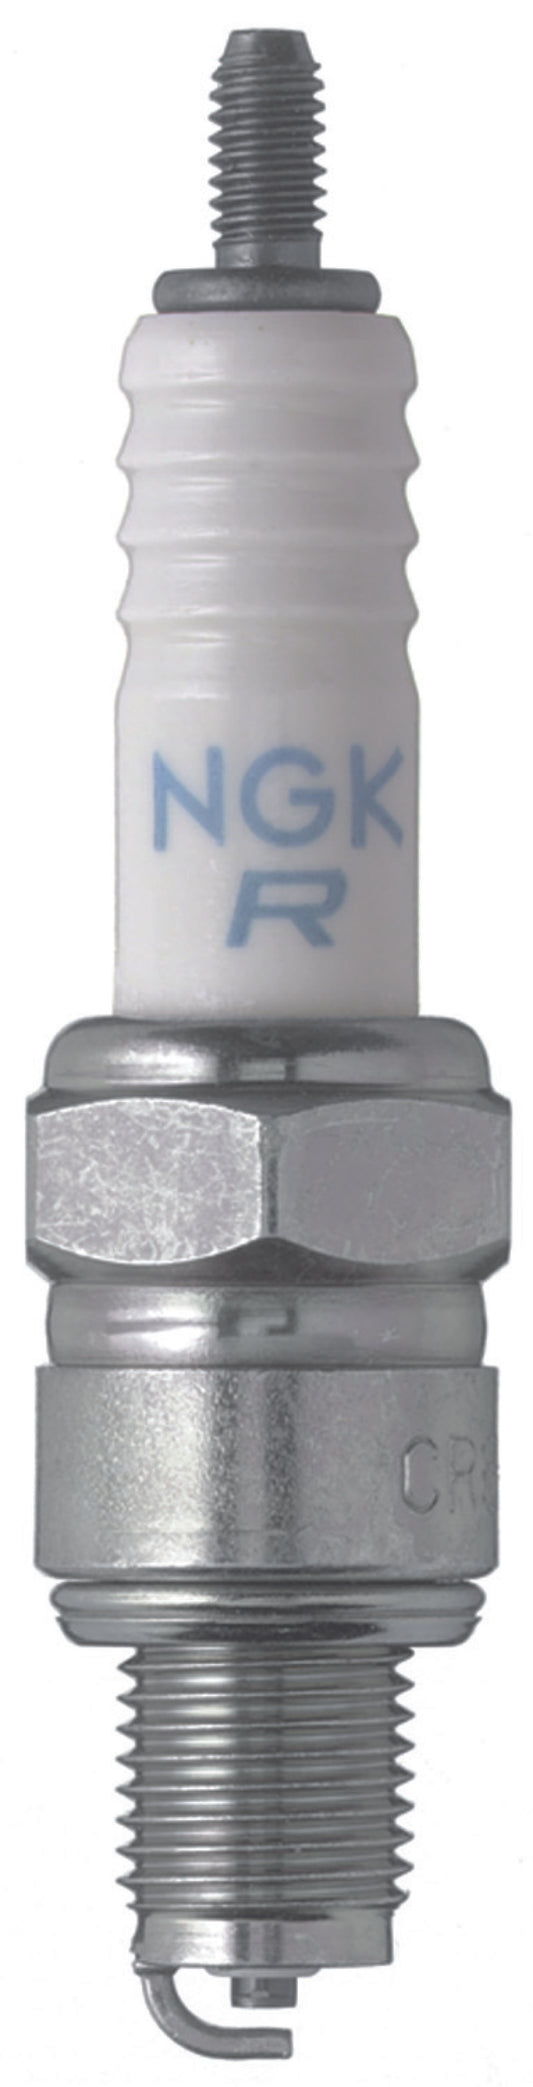 NGK Standard Spark Plug Box of 10 (CR6HS)